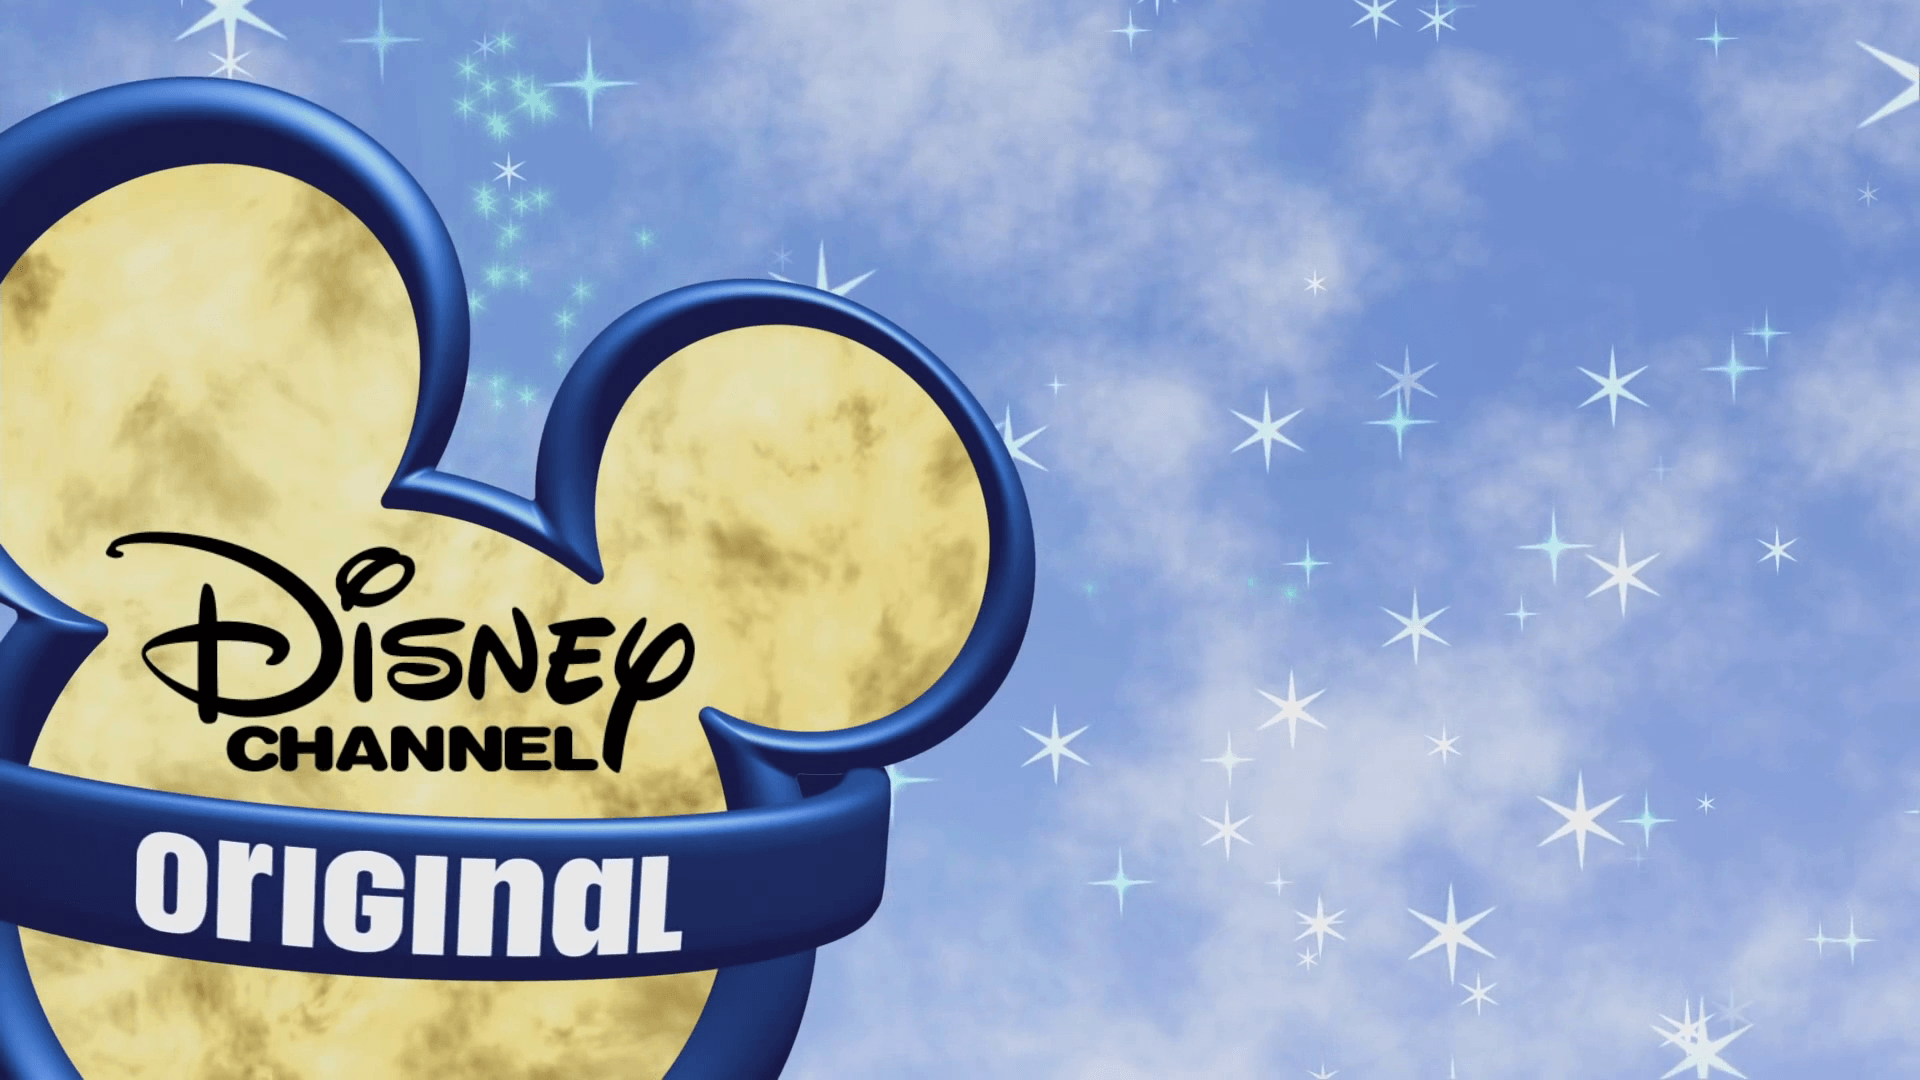 Disney Original Logo - Image - Disney Channel Original 2007 Widescreen.png | Logopedia ...